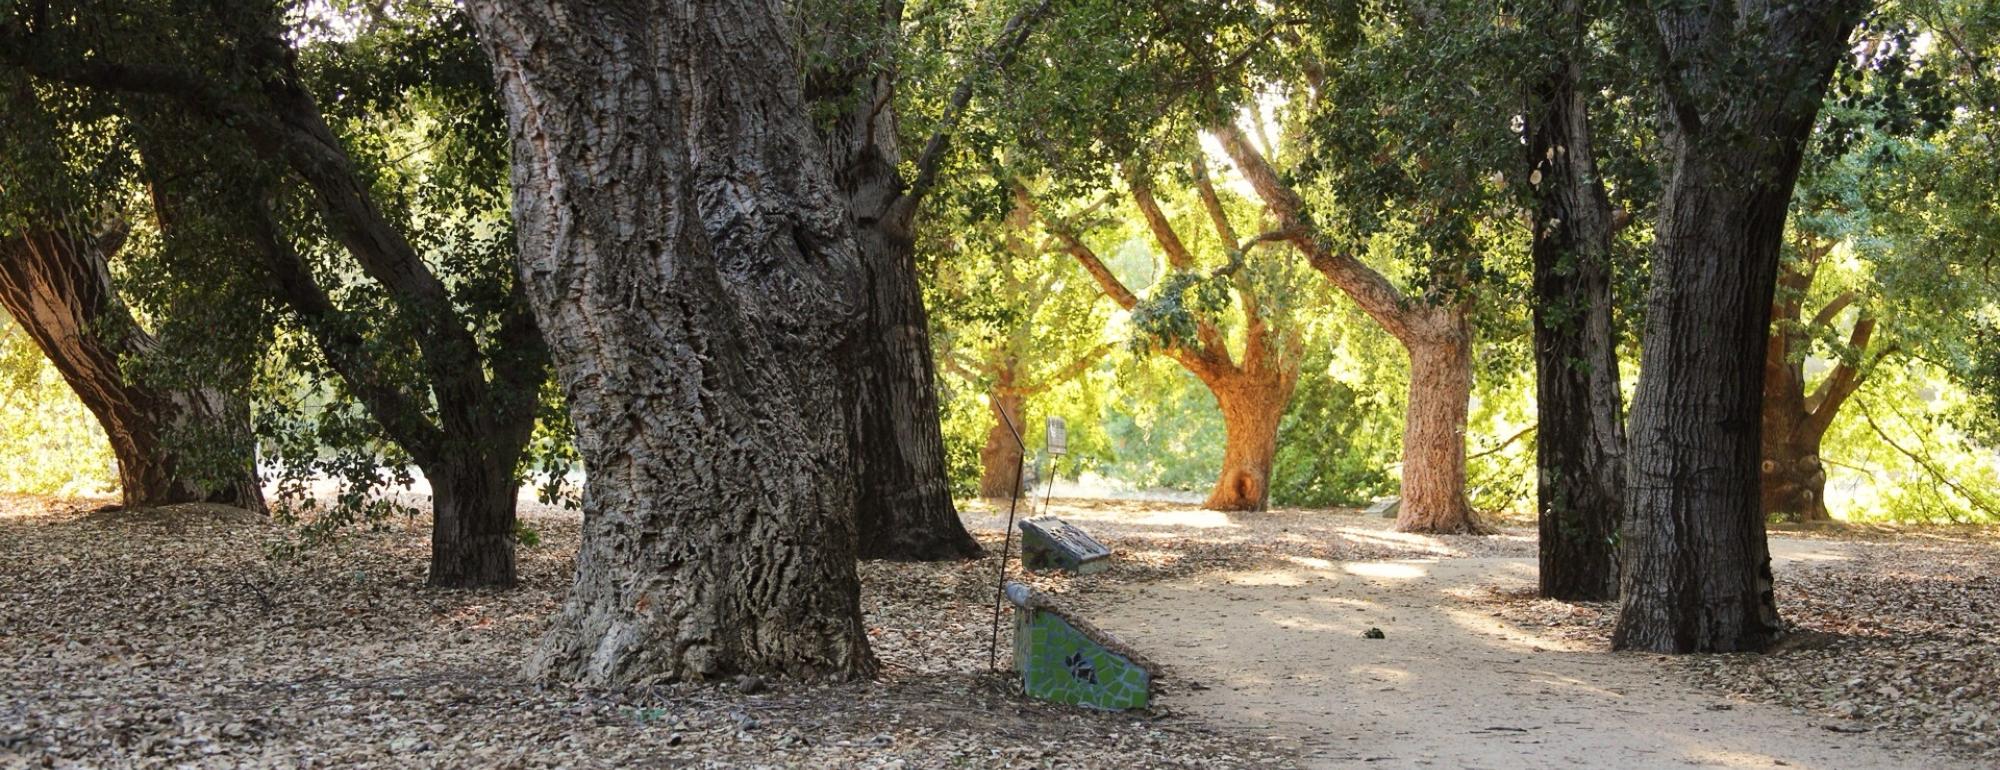 Image of the Peter J. Shields Oak Grove in the UC Davis Arboretum.